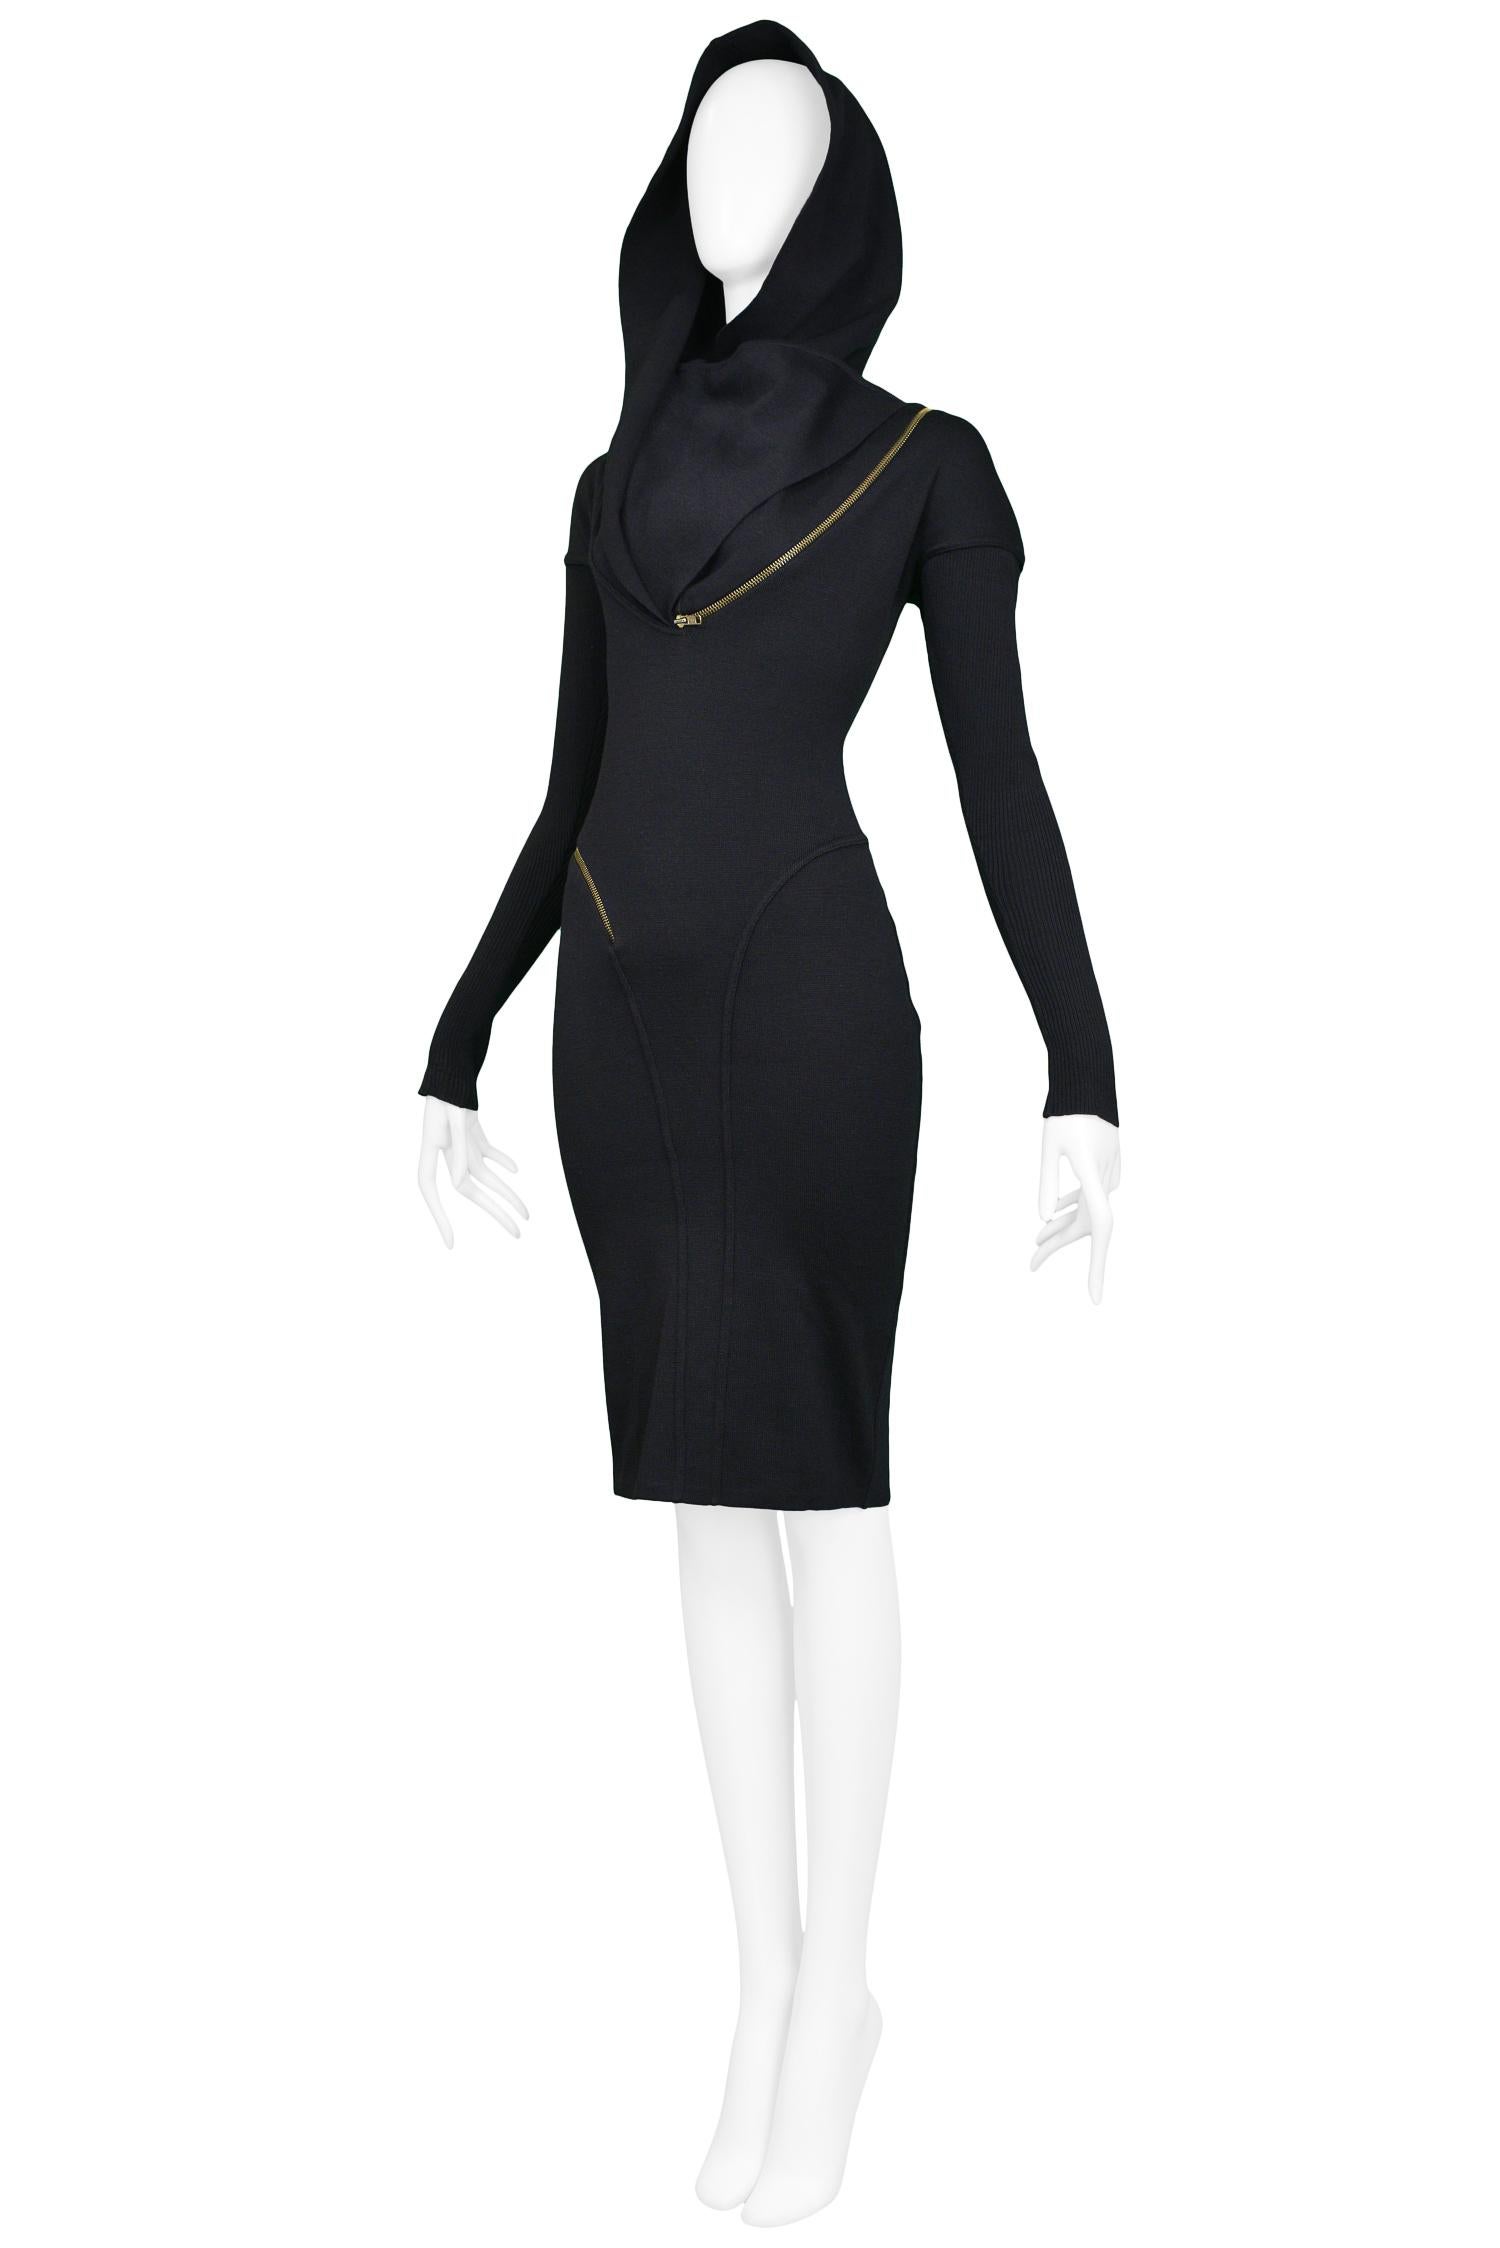 Women's Iconic 1986 Black Hooded Zipper Dress